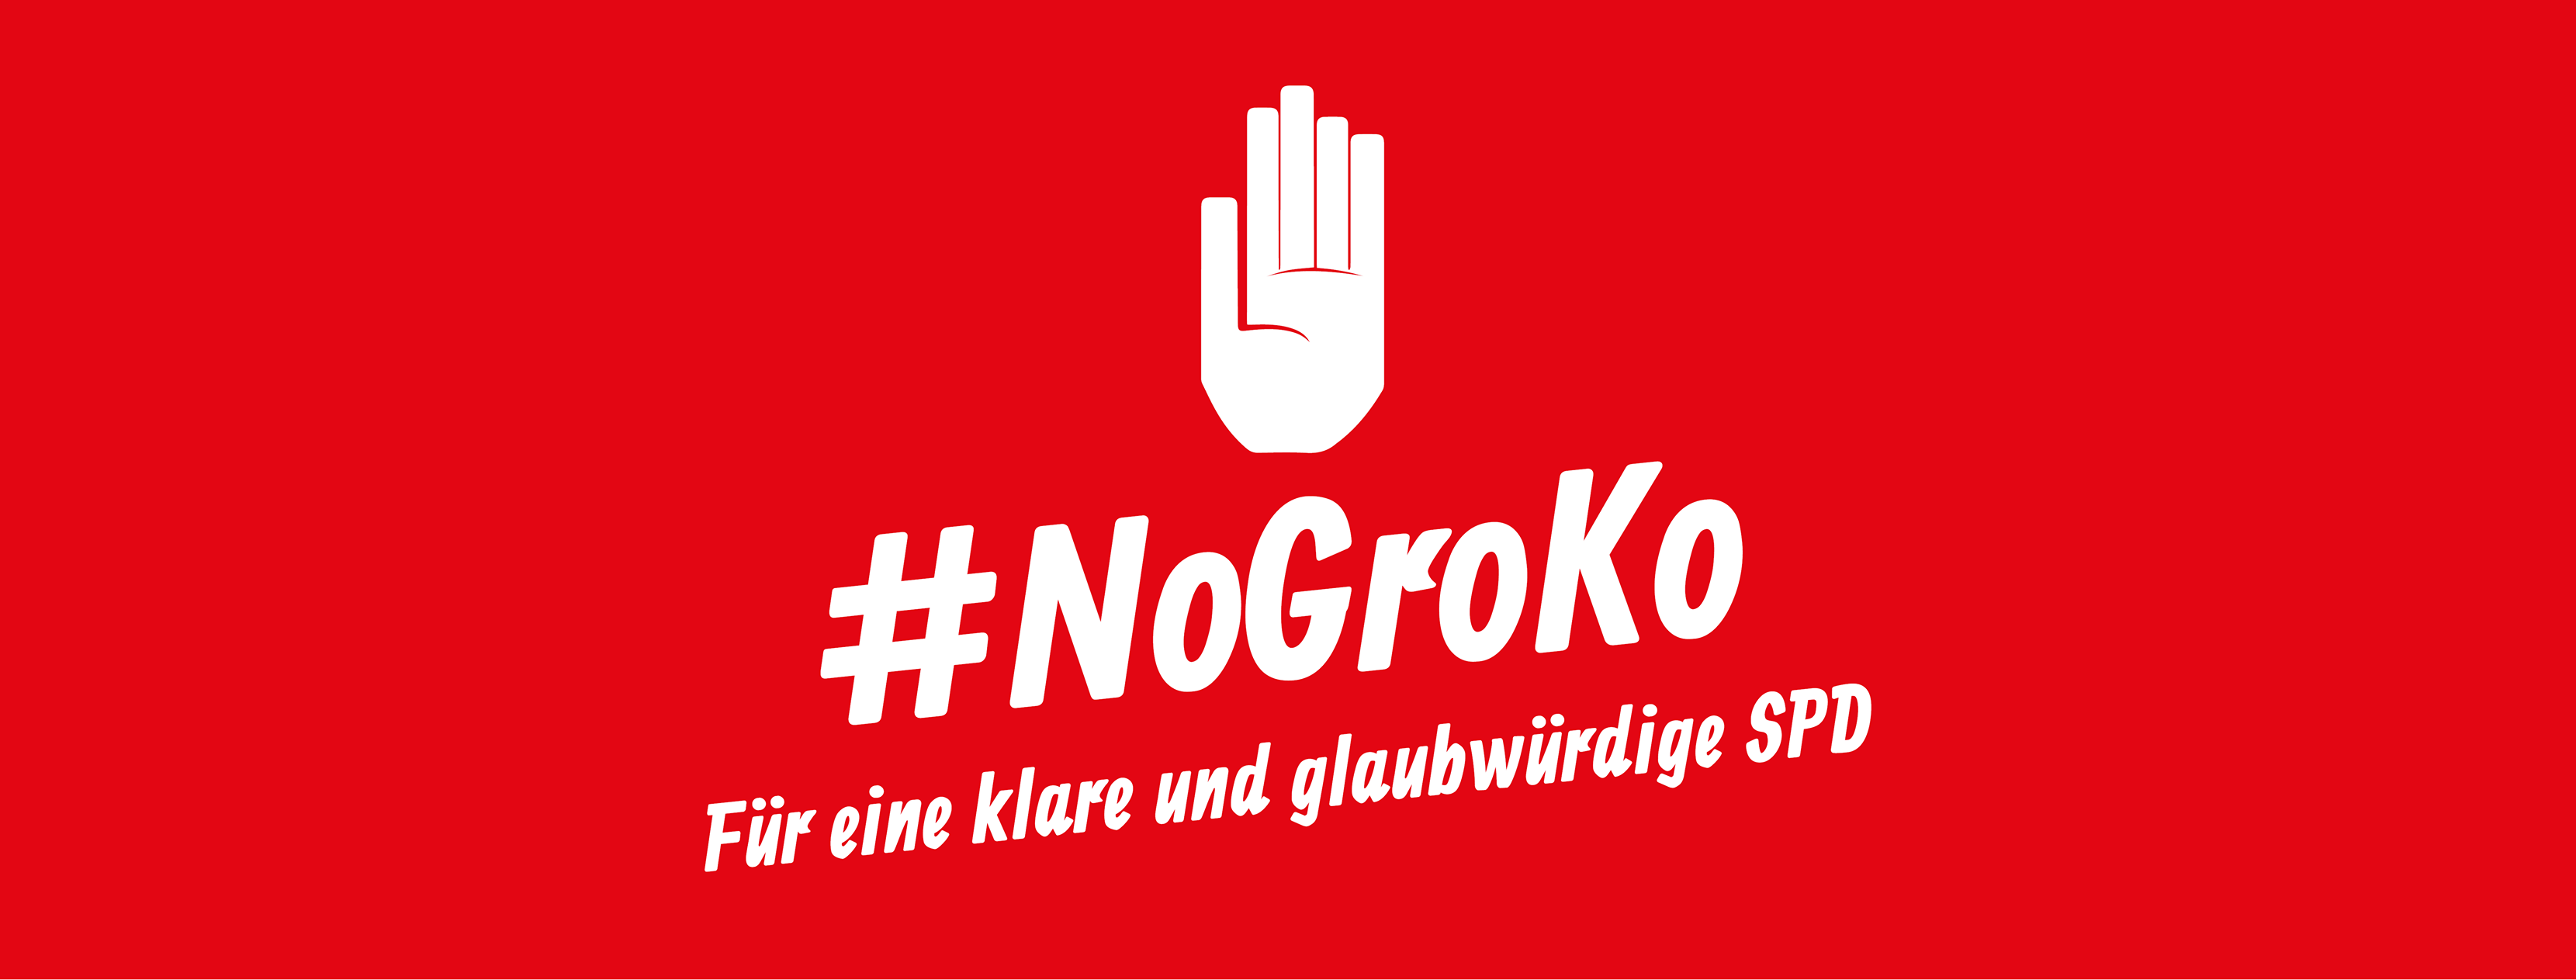 No-Groko-Banner-der-Jusos-SPD-Quelle-Jusos-Bremen-2018